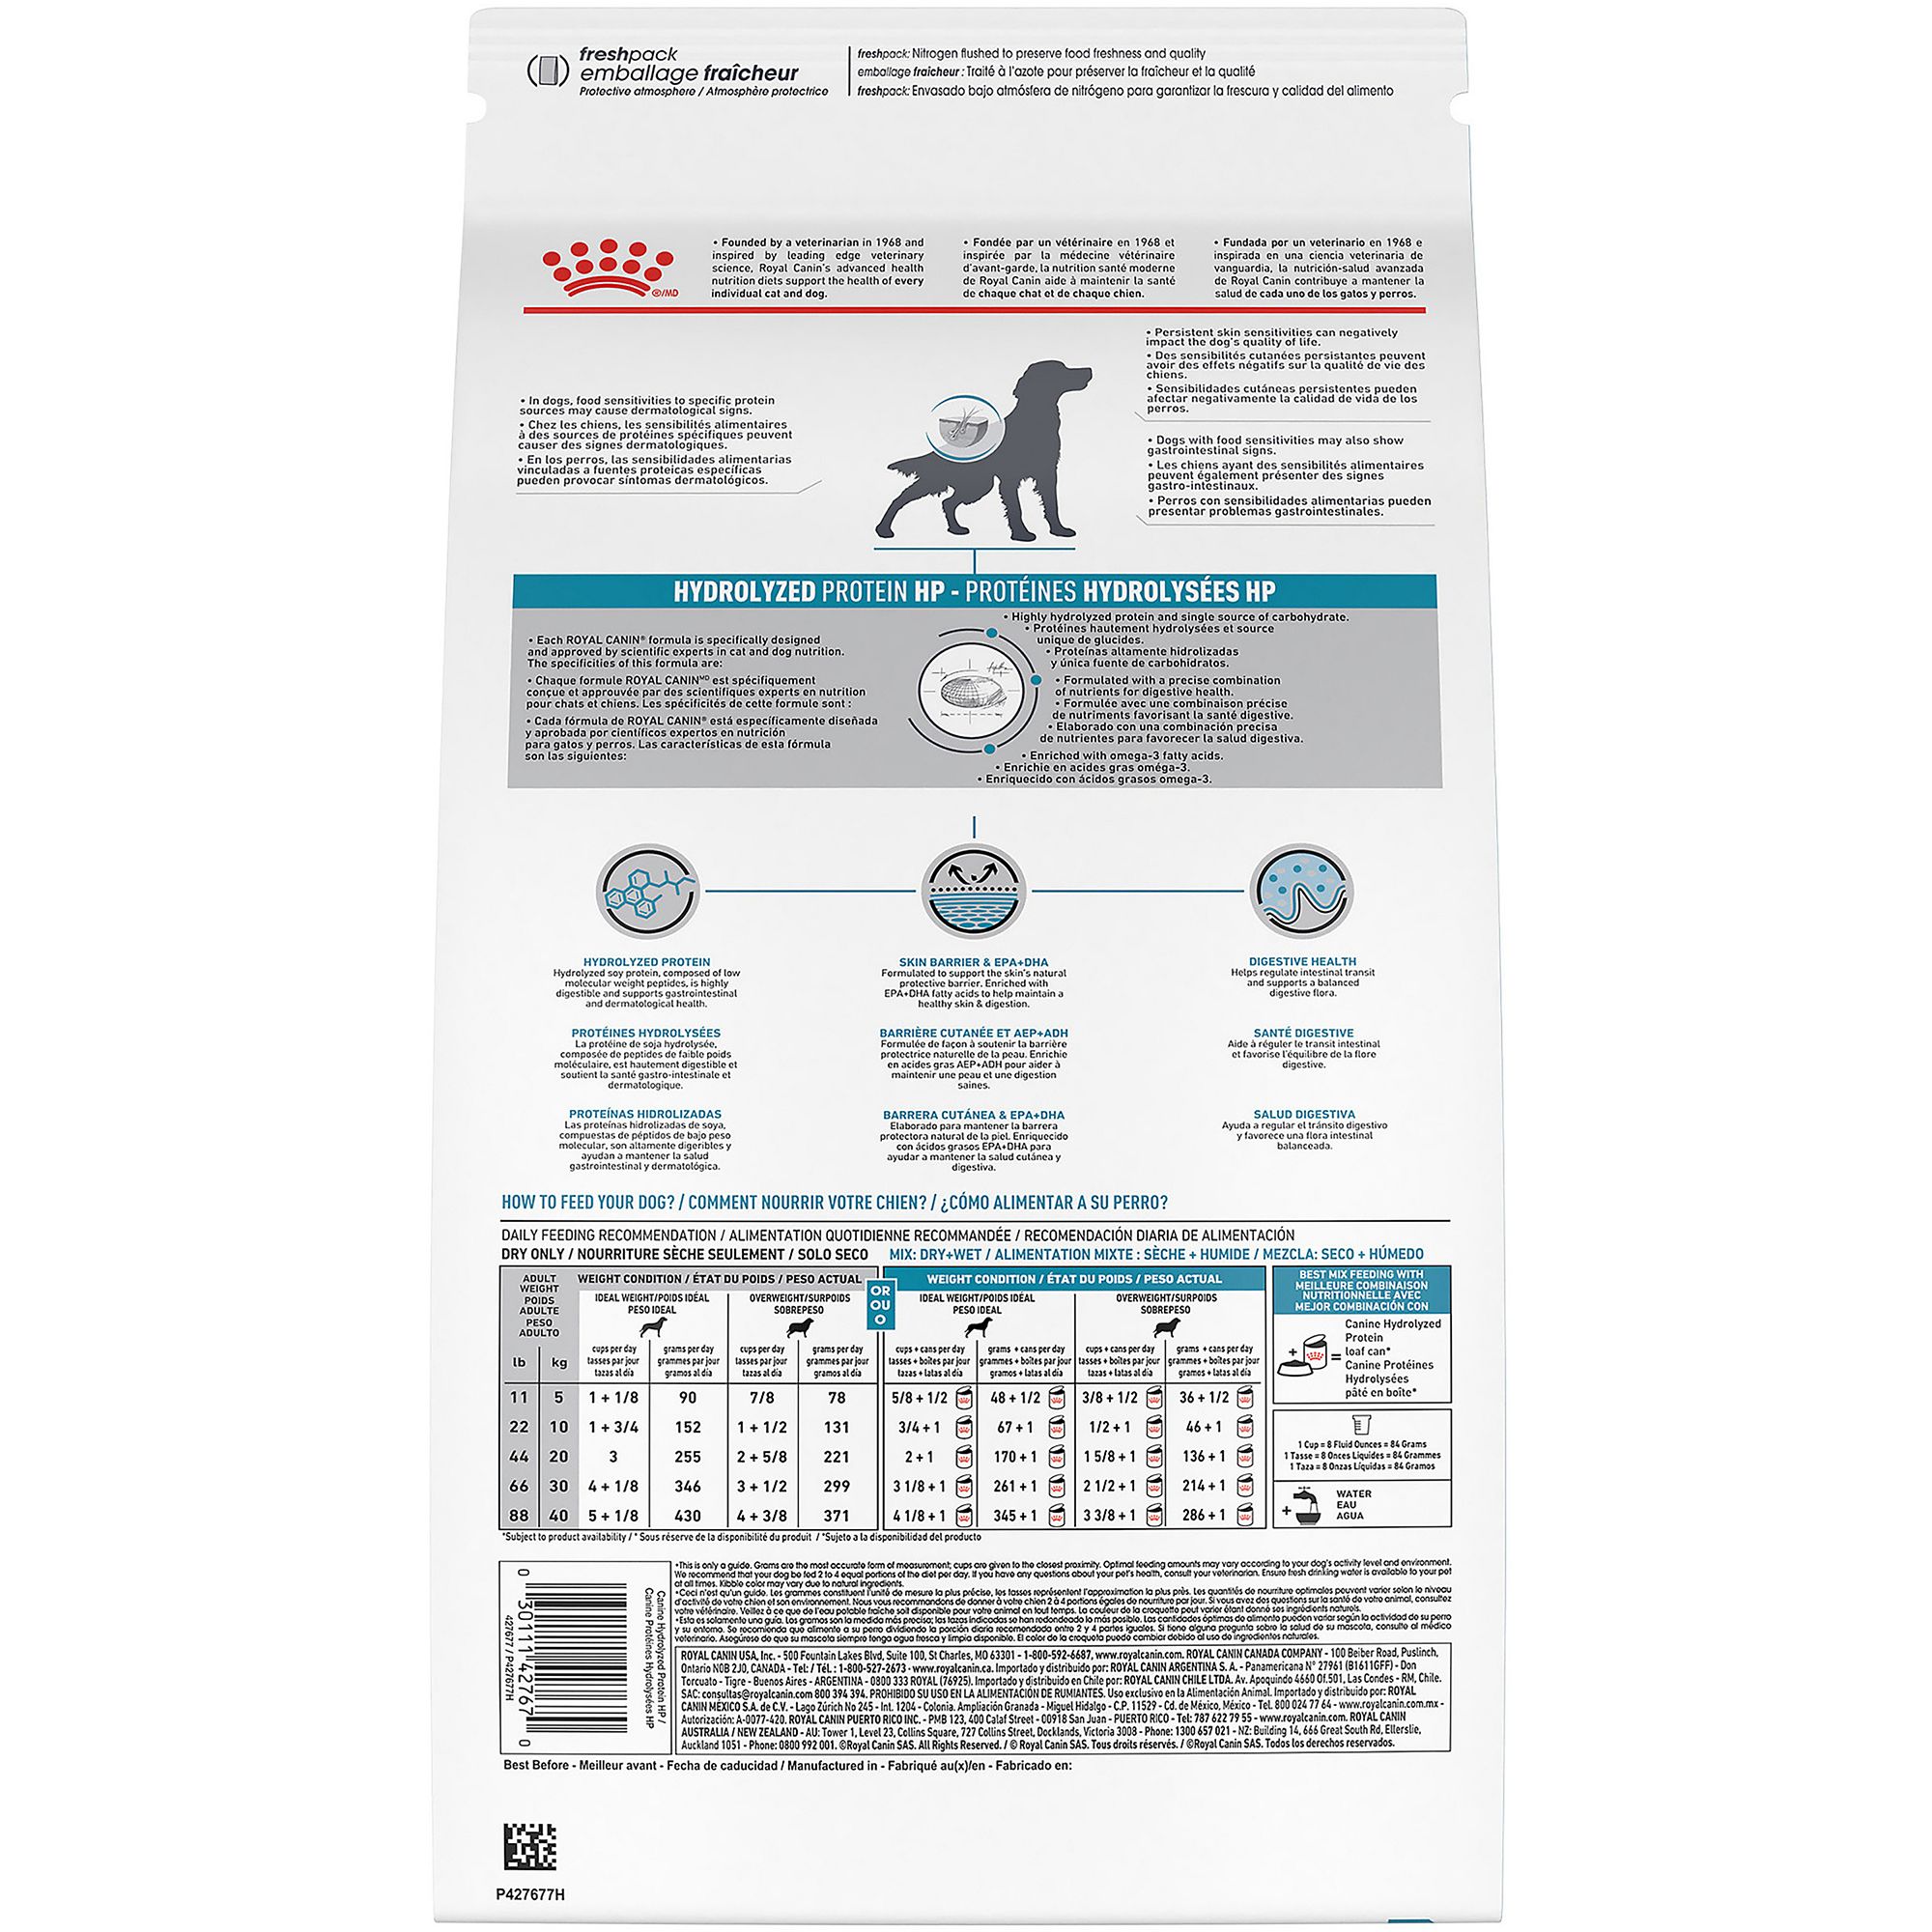 canine hydrolyzed protein adult hp dry dog food